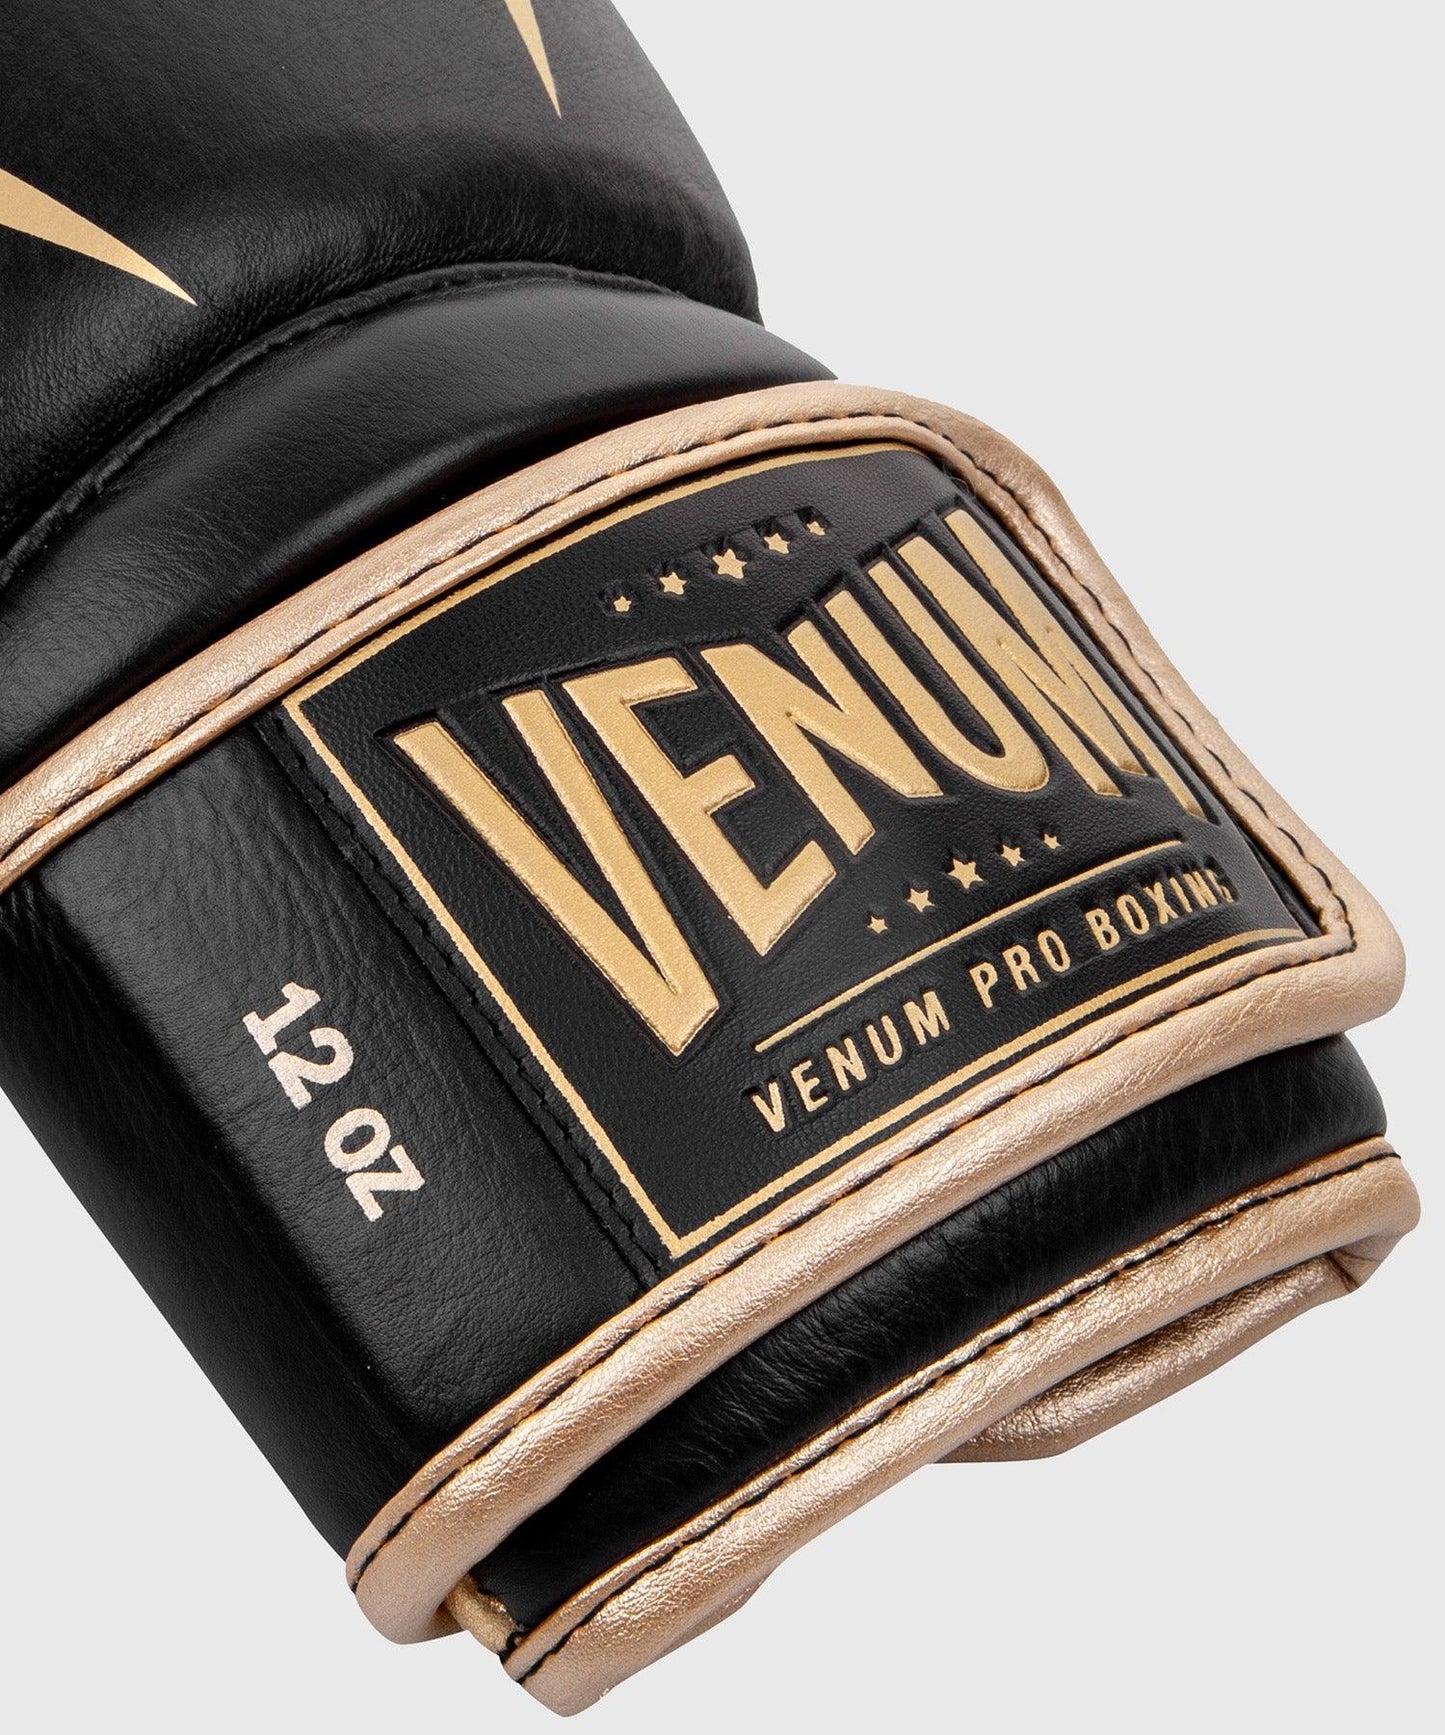 Venum Giant 2.0 Pro Boxing Gloves Velcro - Black/Gold Picture 7